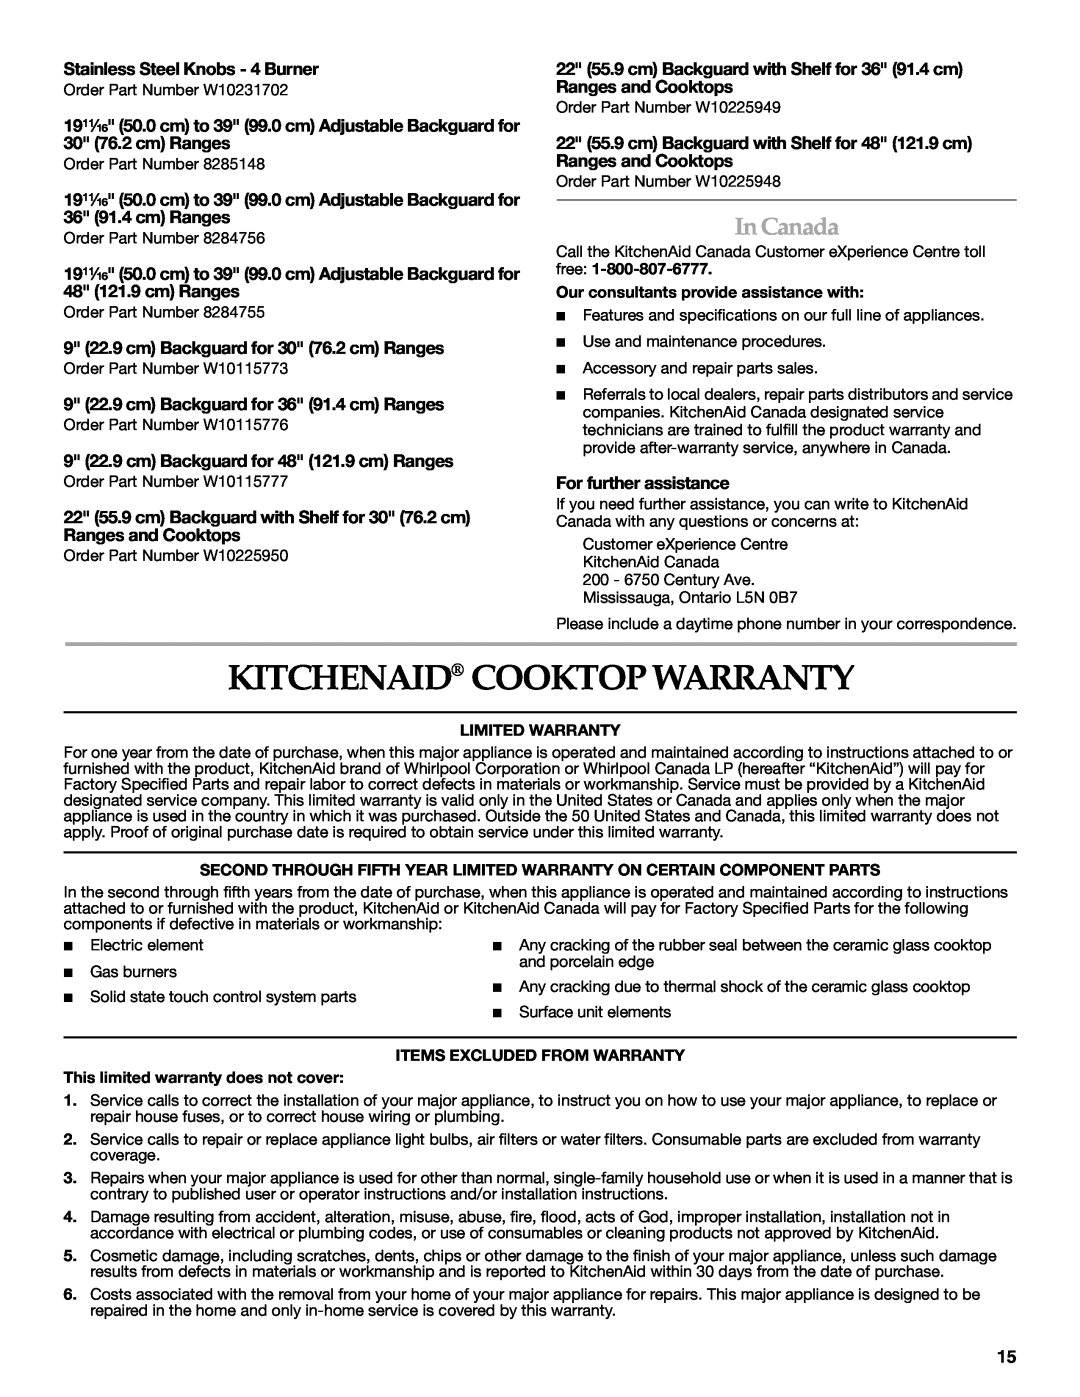 KitchenAid KGCU483VSS Kitchenaid Cooktop Warranty, In Canada, Stainless Steel Knobs - 4 Burner, For further assistance 